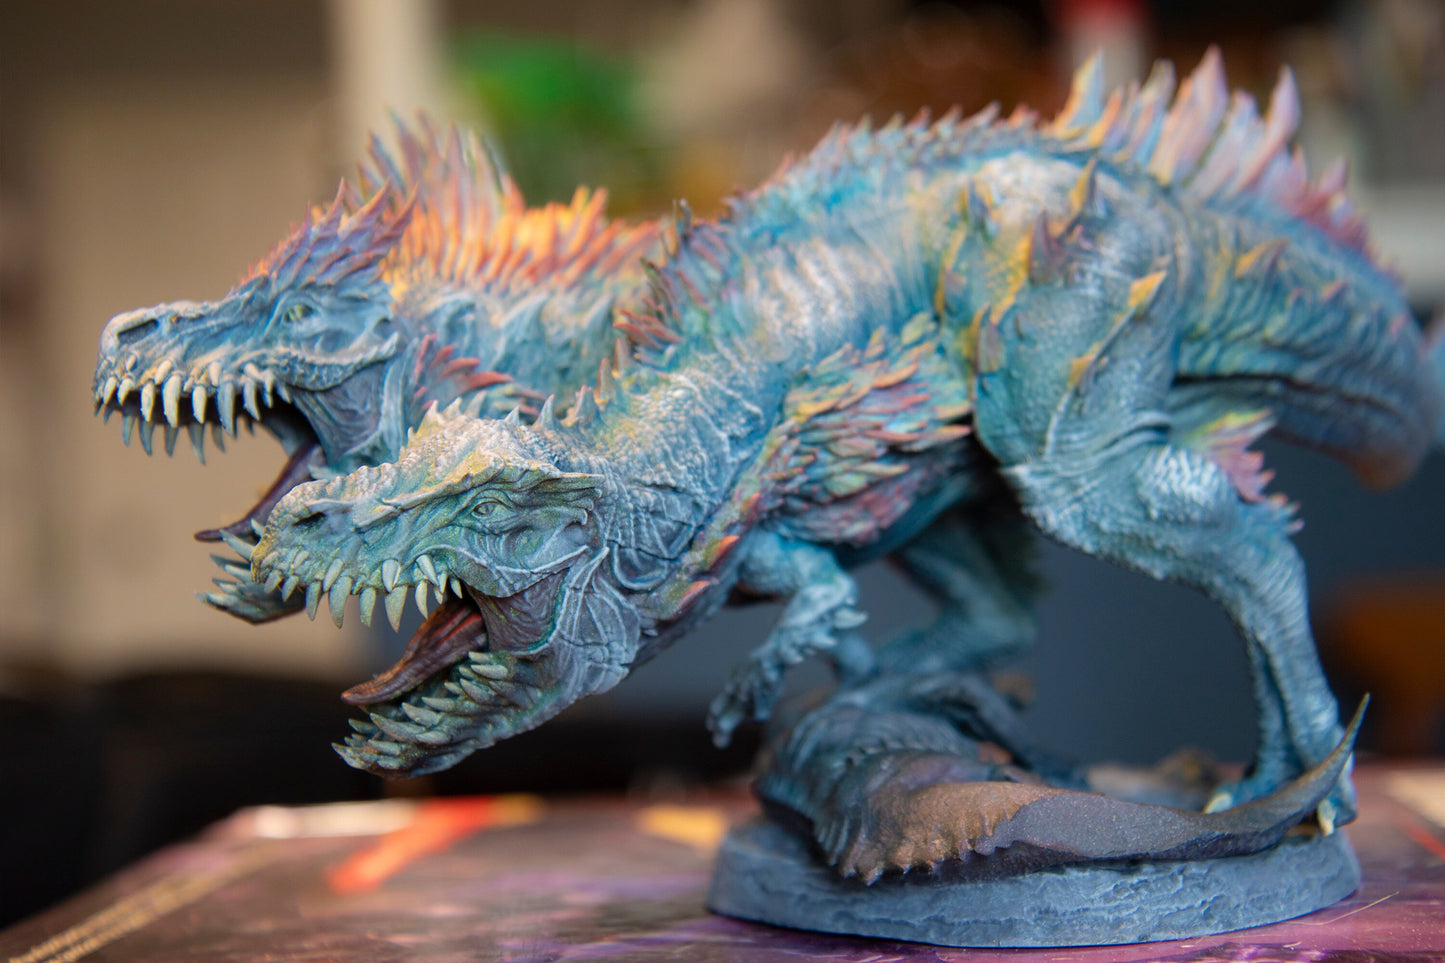 Velociraptor Bundle - 8 Mini Monster Mayhem Printed Miniatures | Dungeons & Dragons | Pathfinder | Tabletop